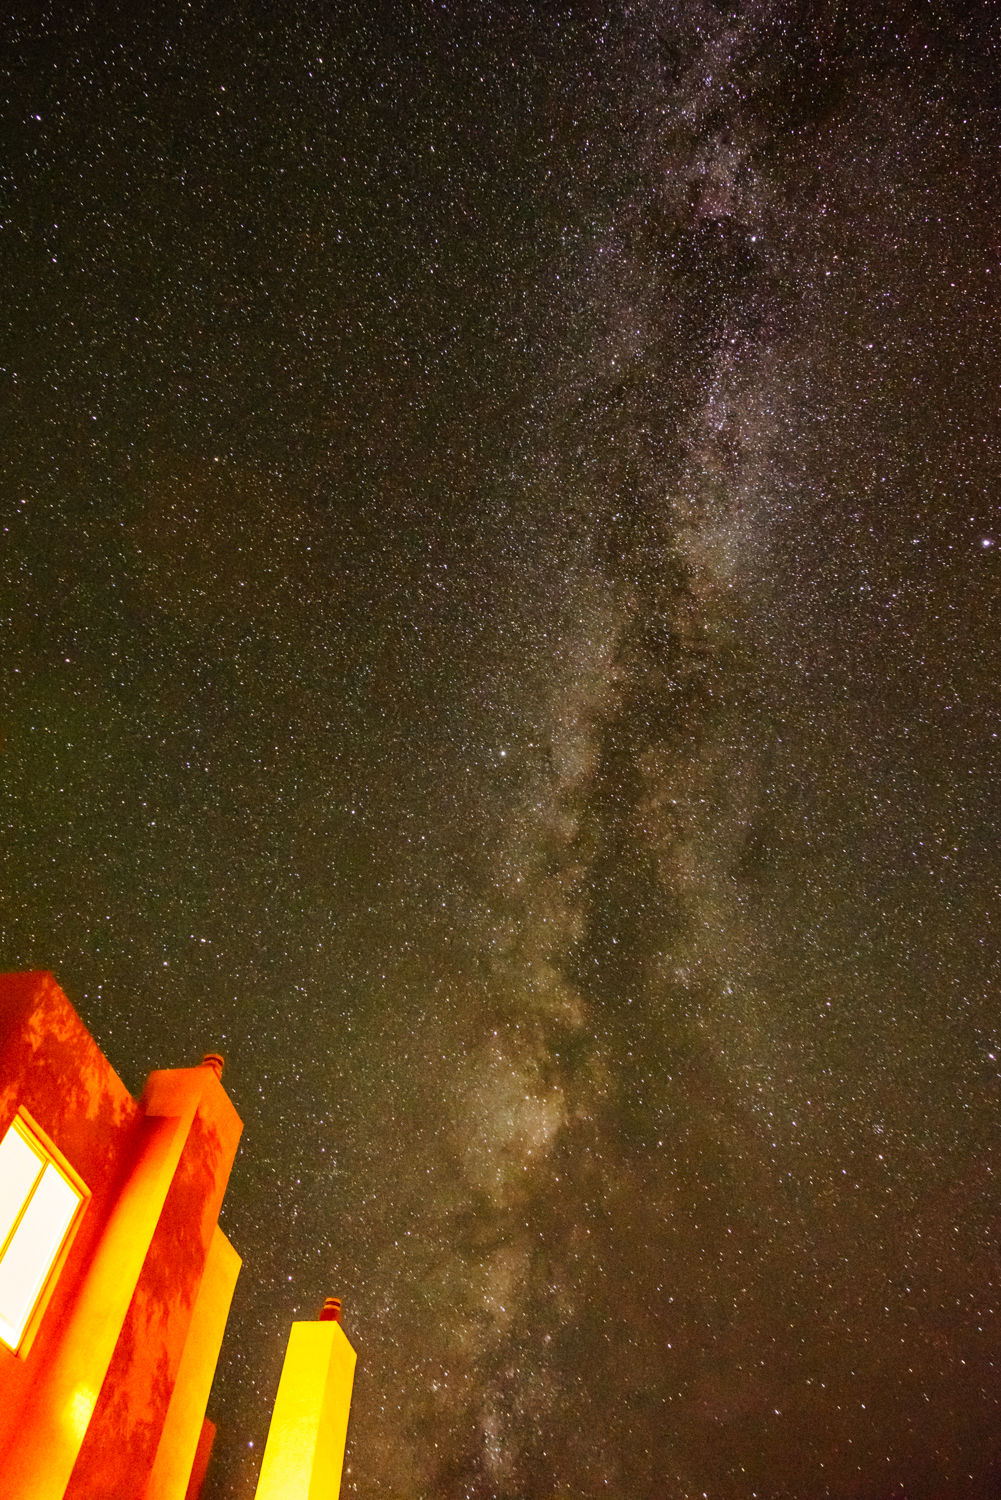 Moab Night Sky